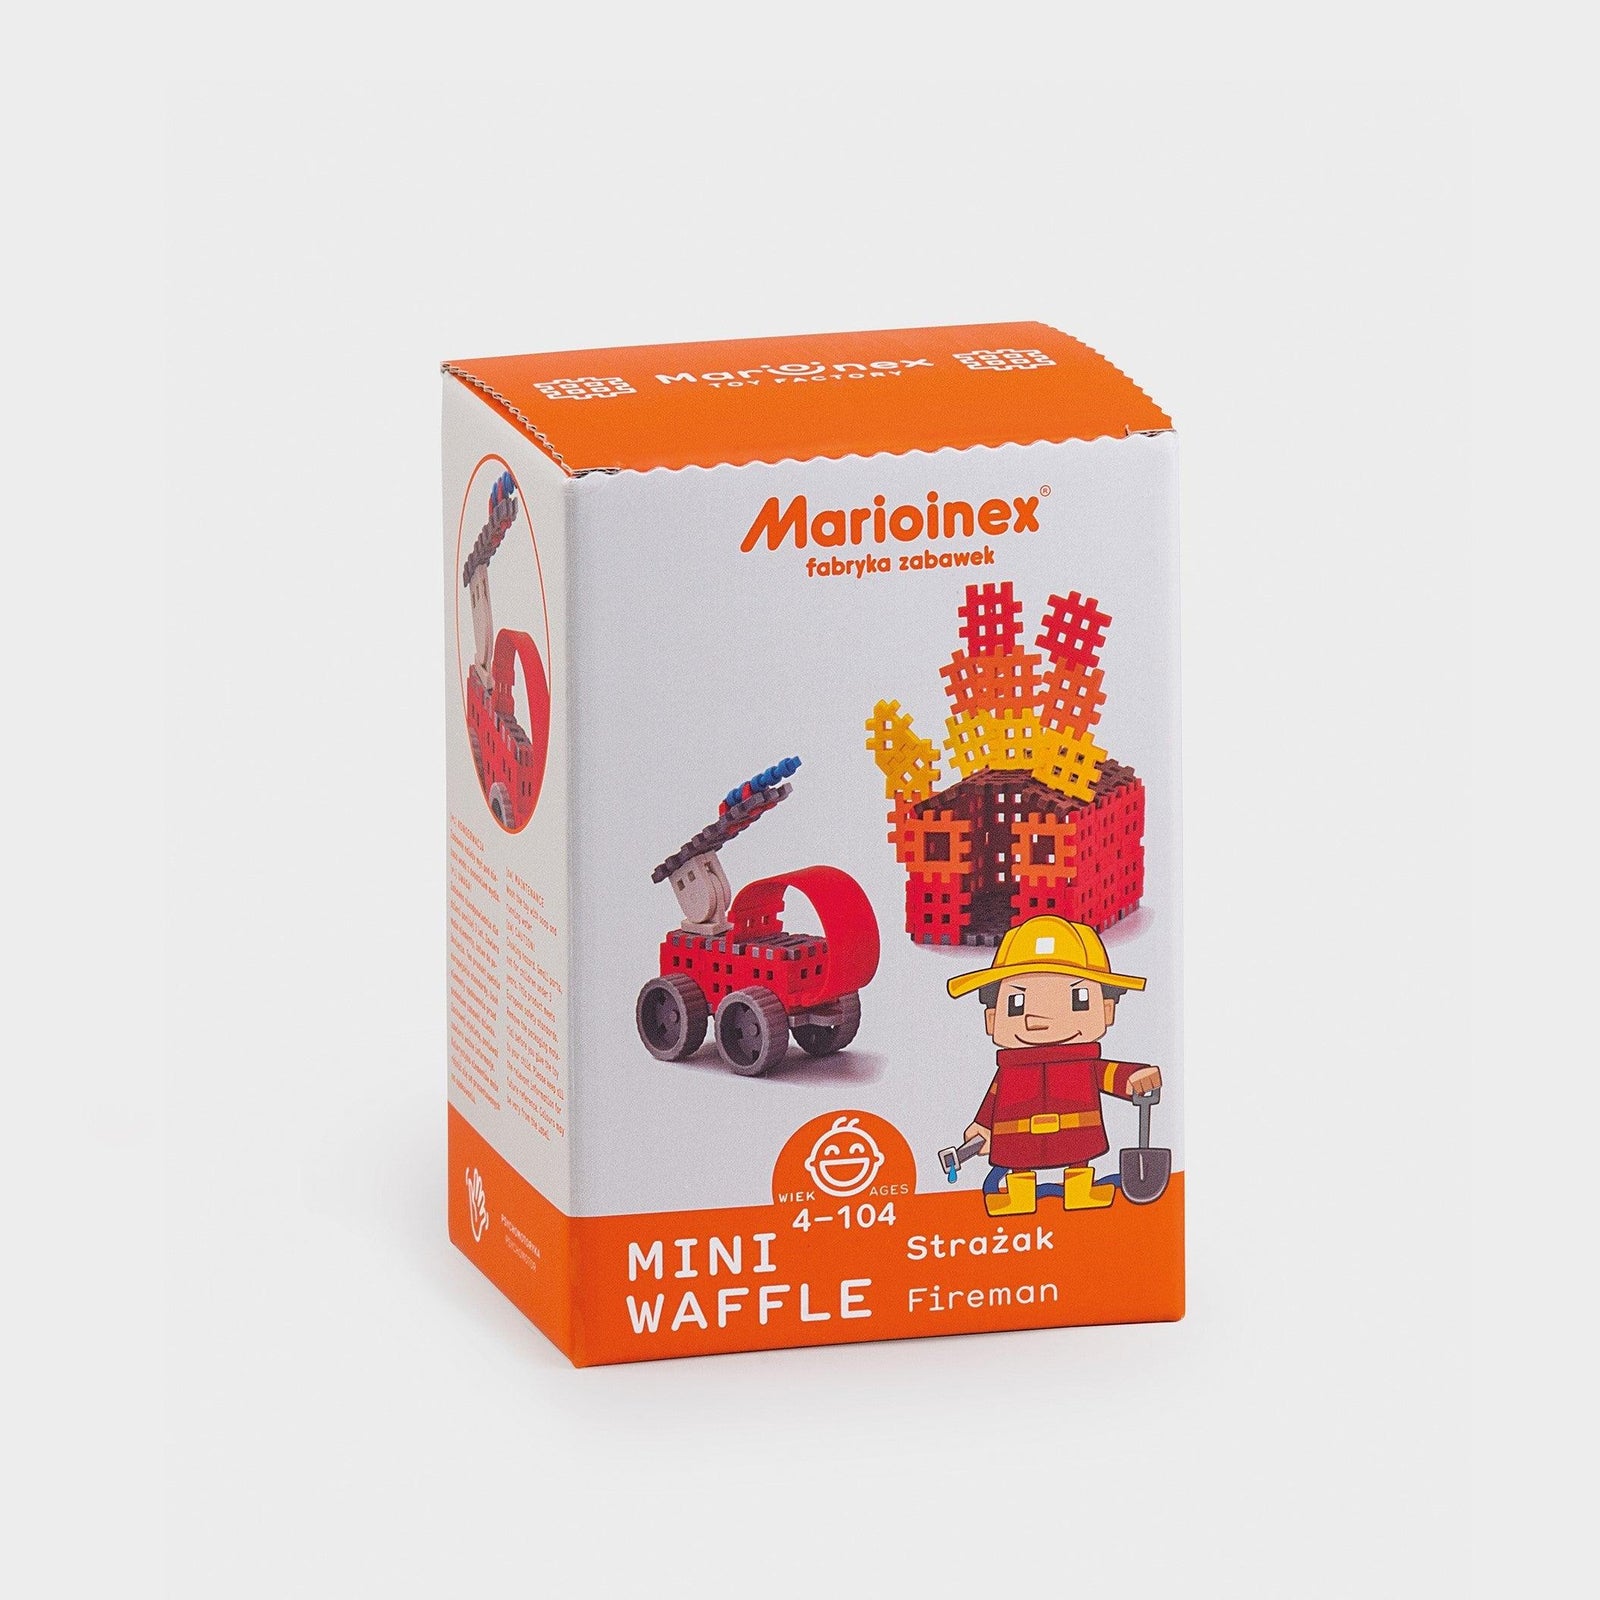 Marioinex: Mini Waffle Fireman Medium 68 blocks